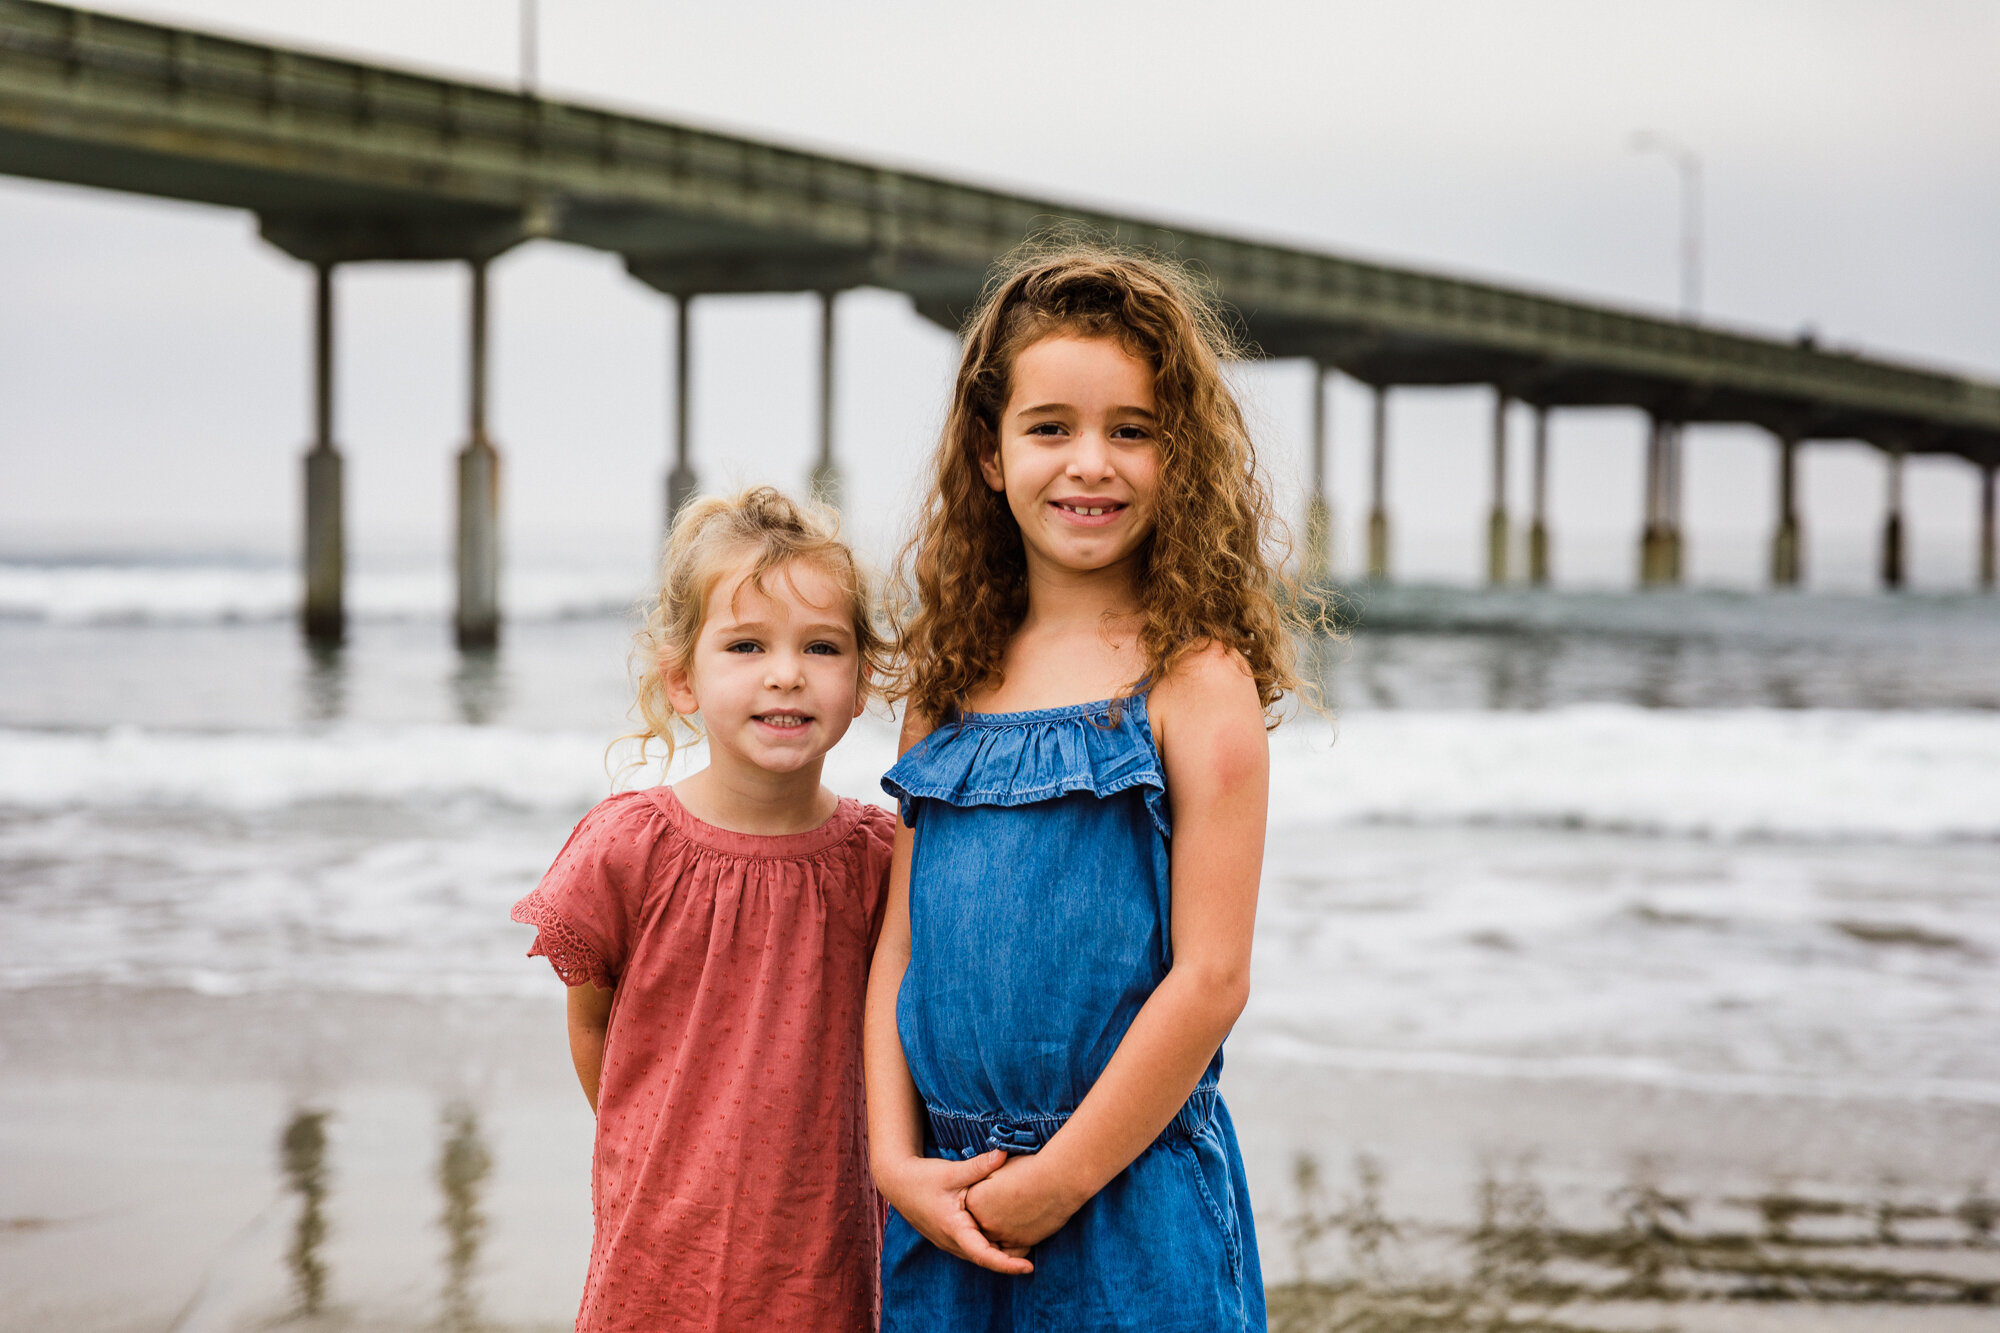 Family Portrait Photography Session at Ocean Beach Pier, San Diego, California-28.jpg